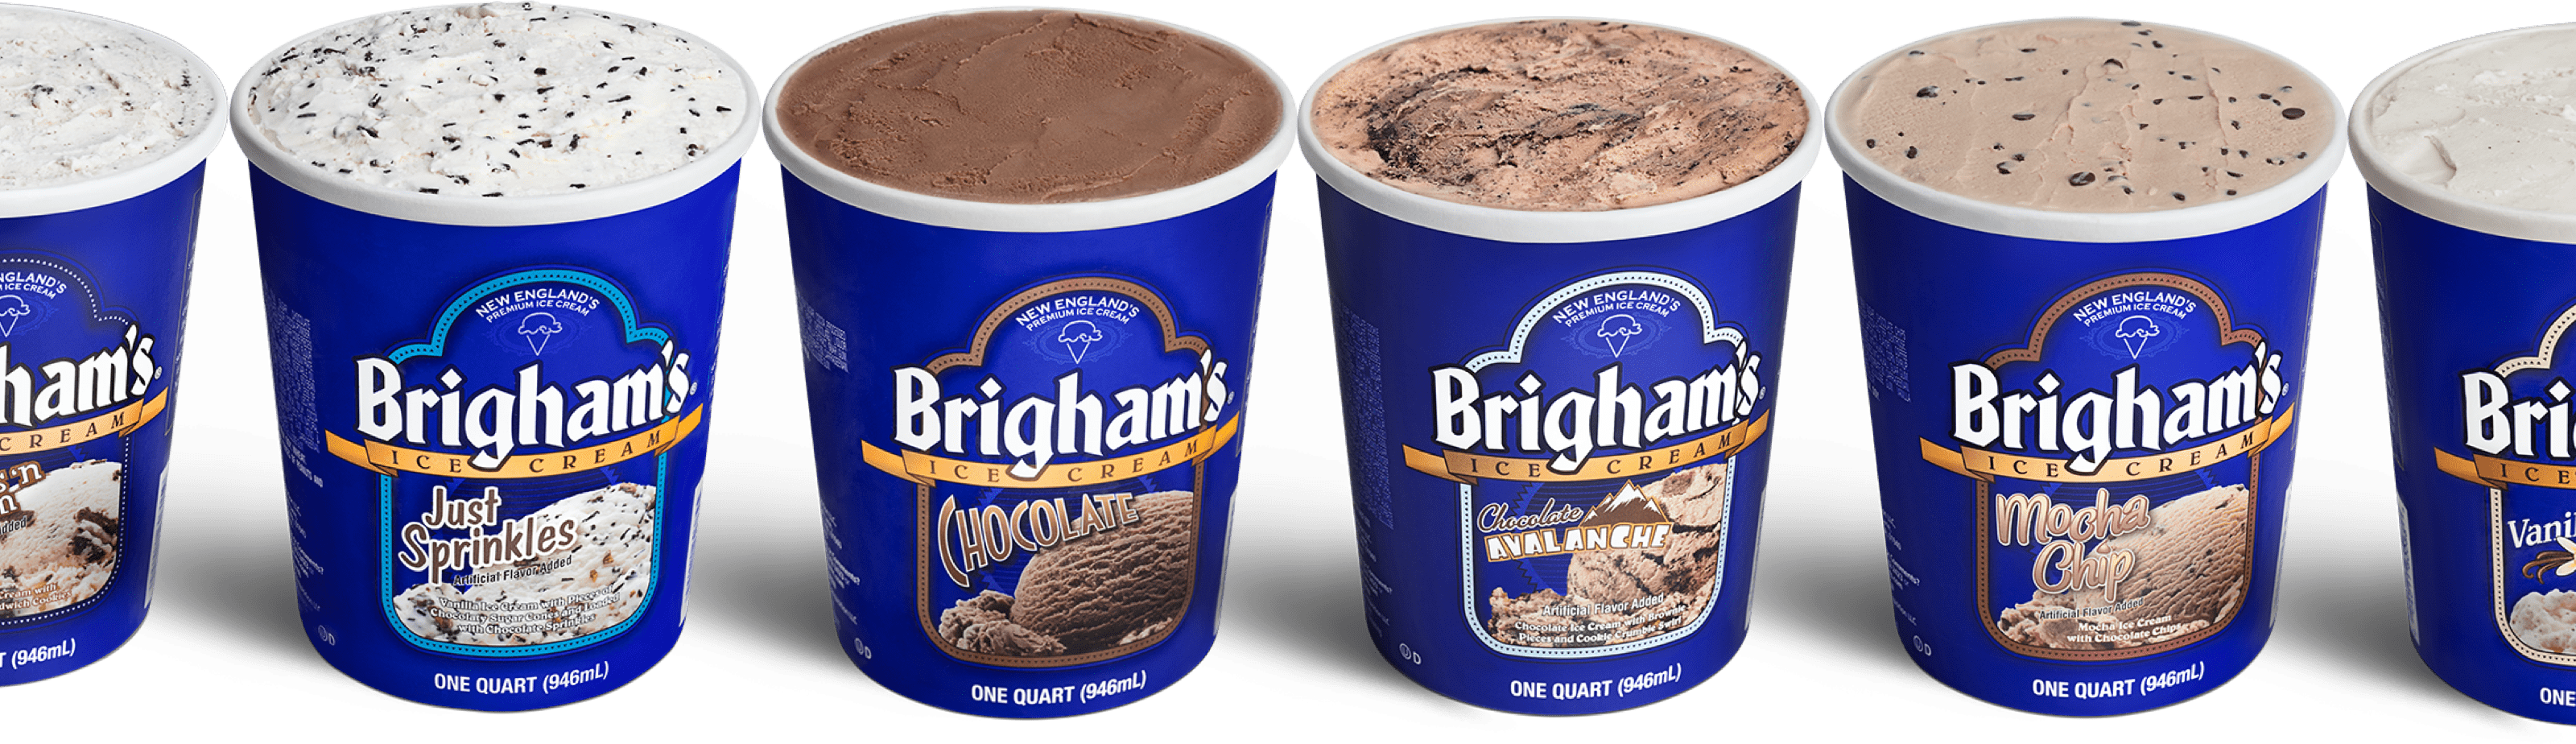 righam's ice cream cartons